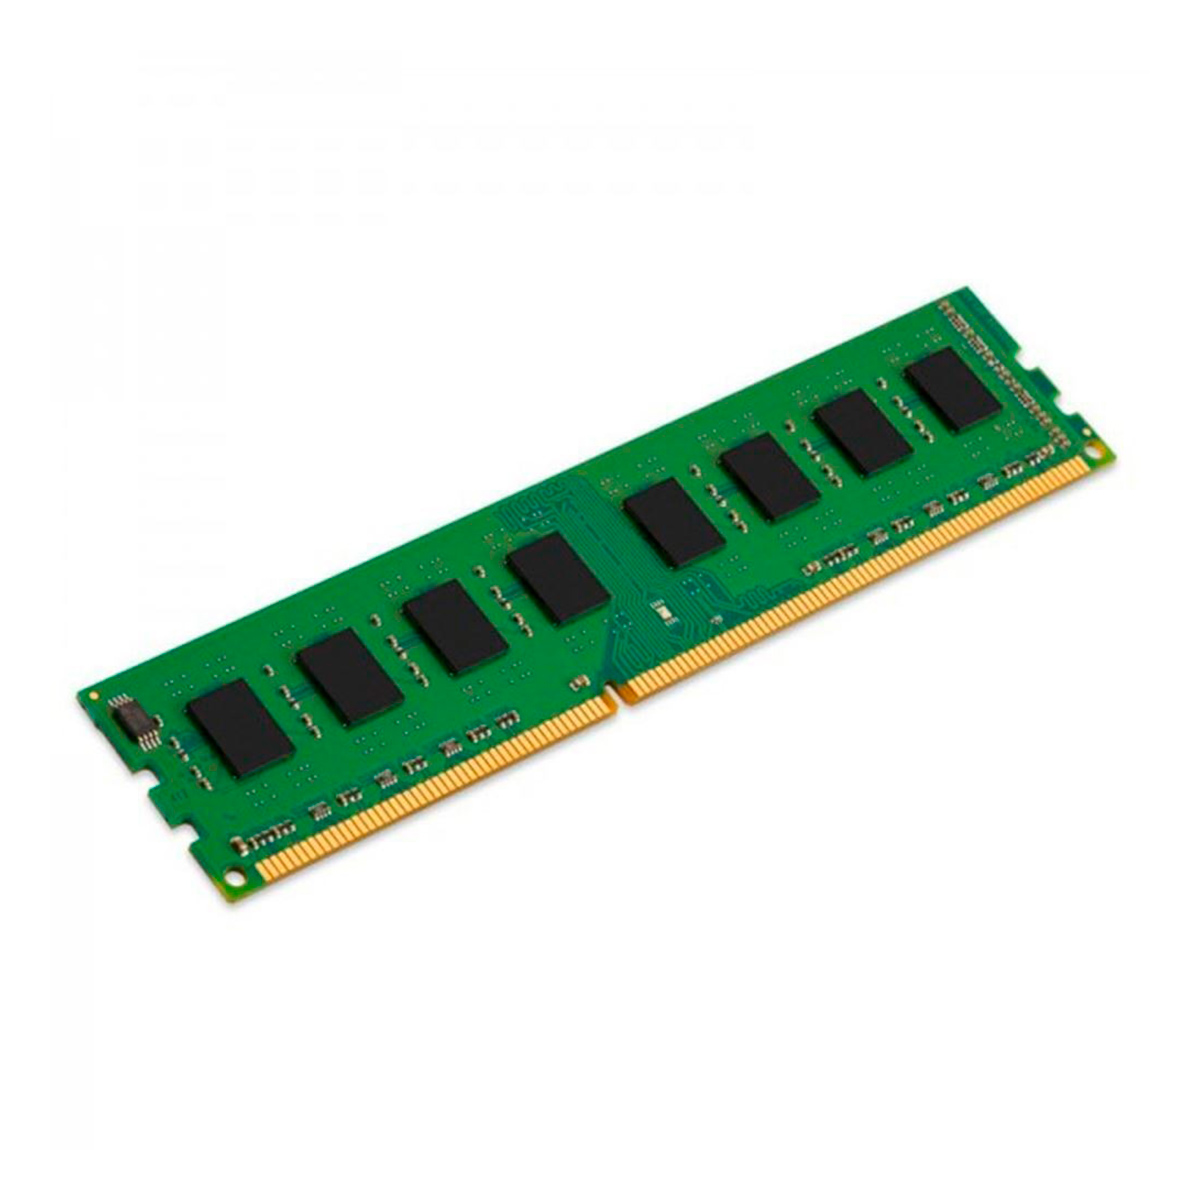 Memória 4GB DDR3 1333MHz - TN1333D3CL9/4GW - OEM